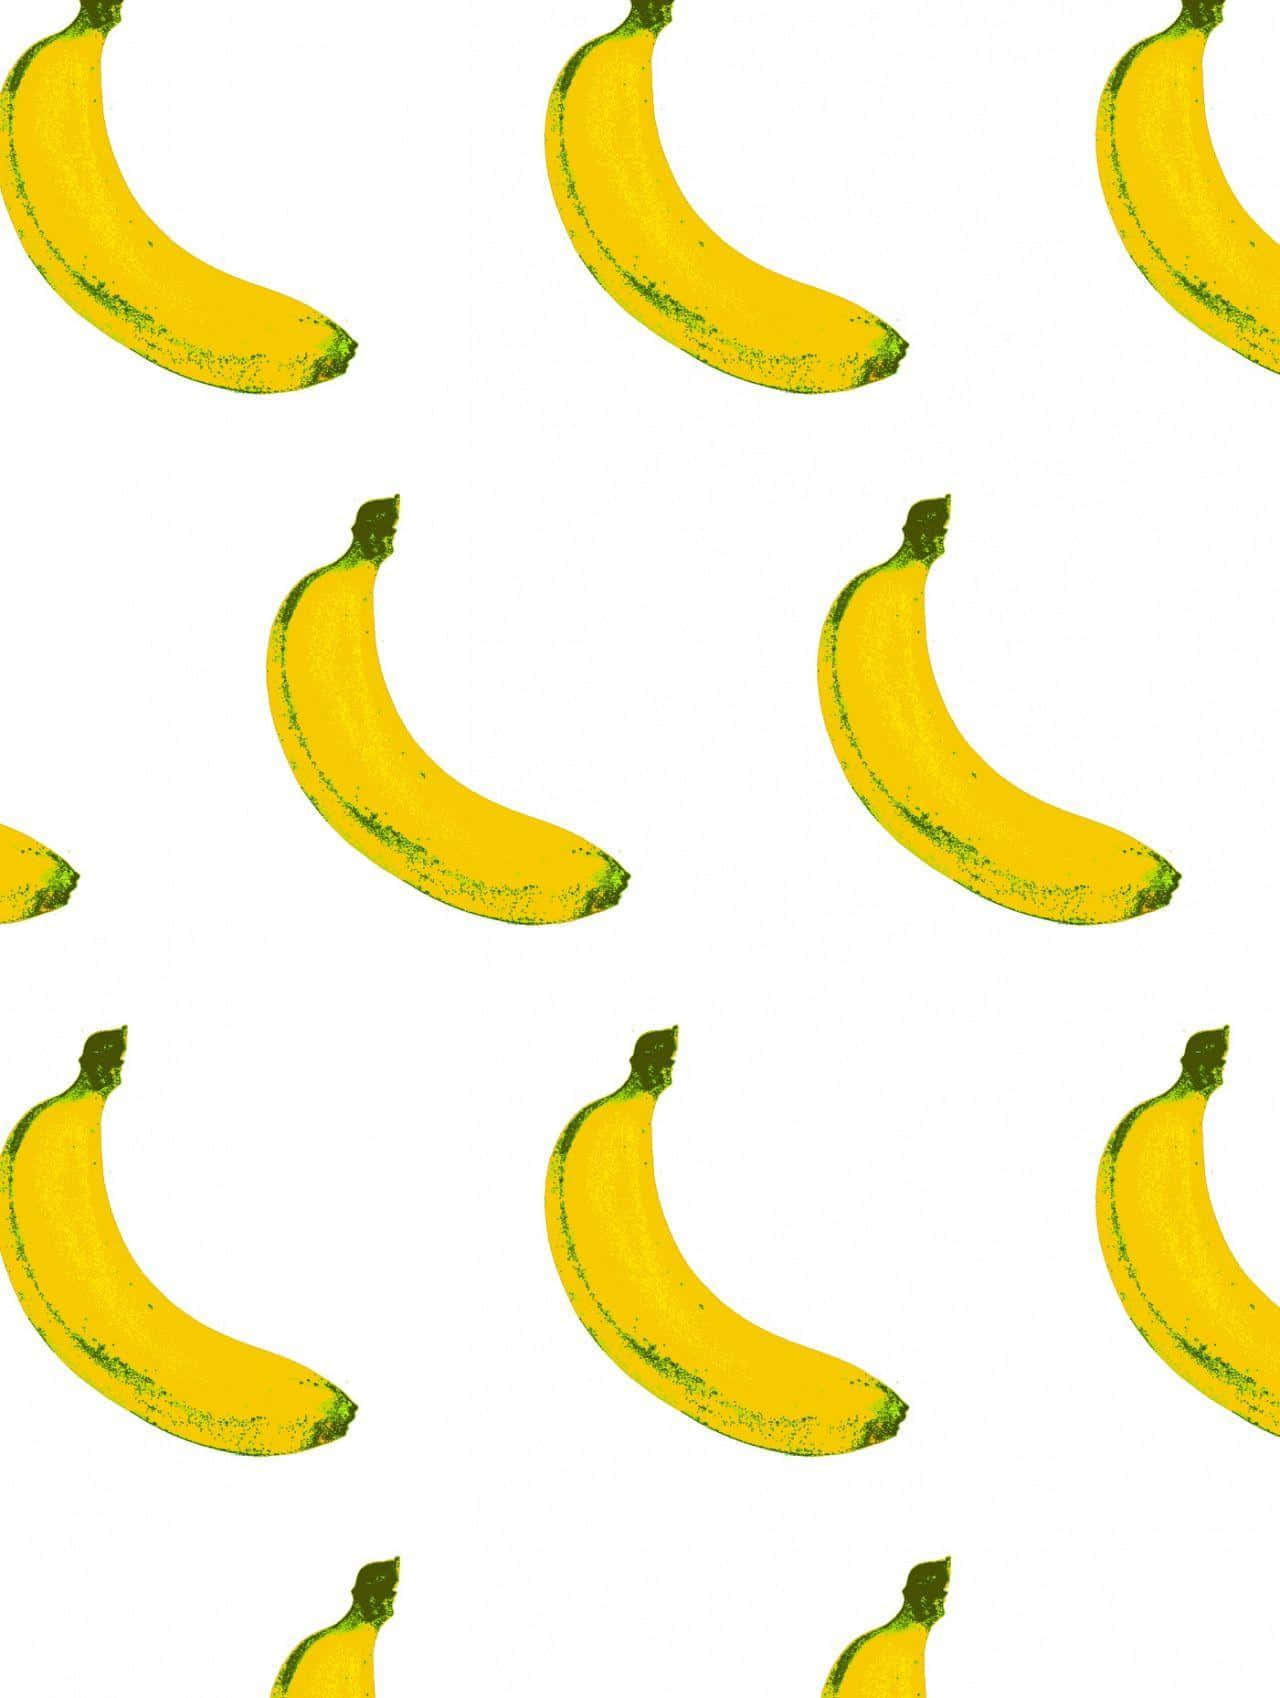 Bananabilleder.